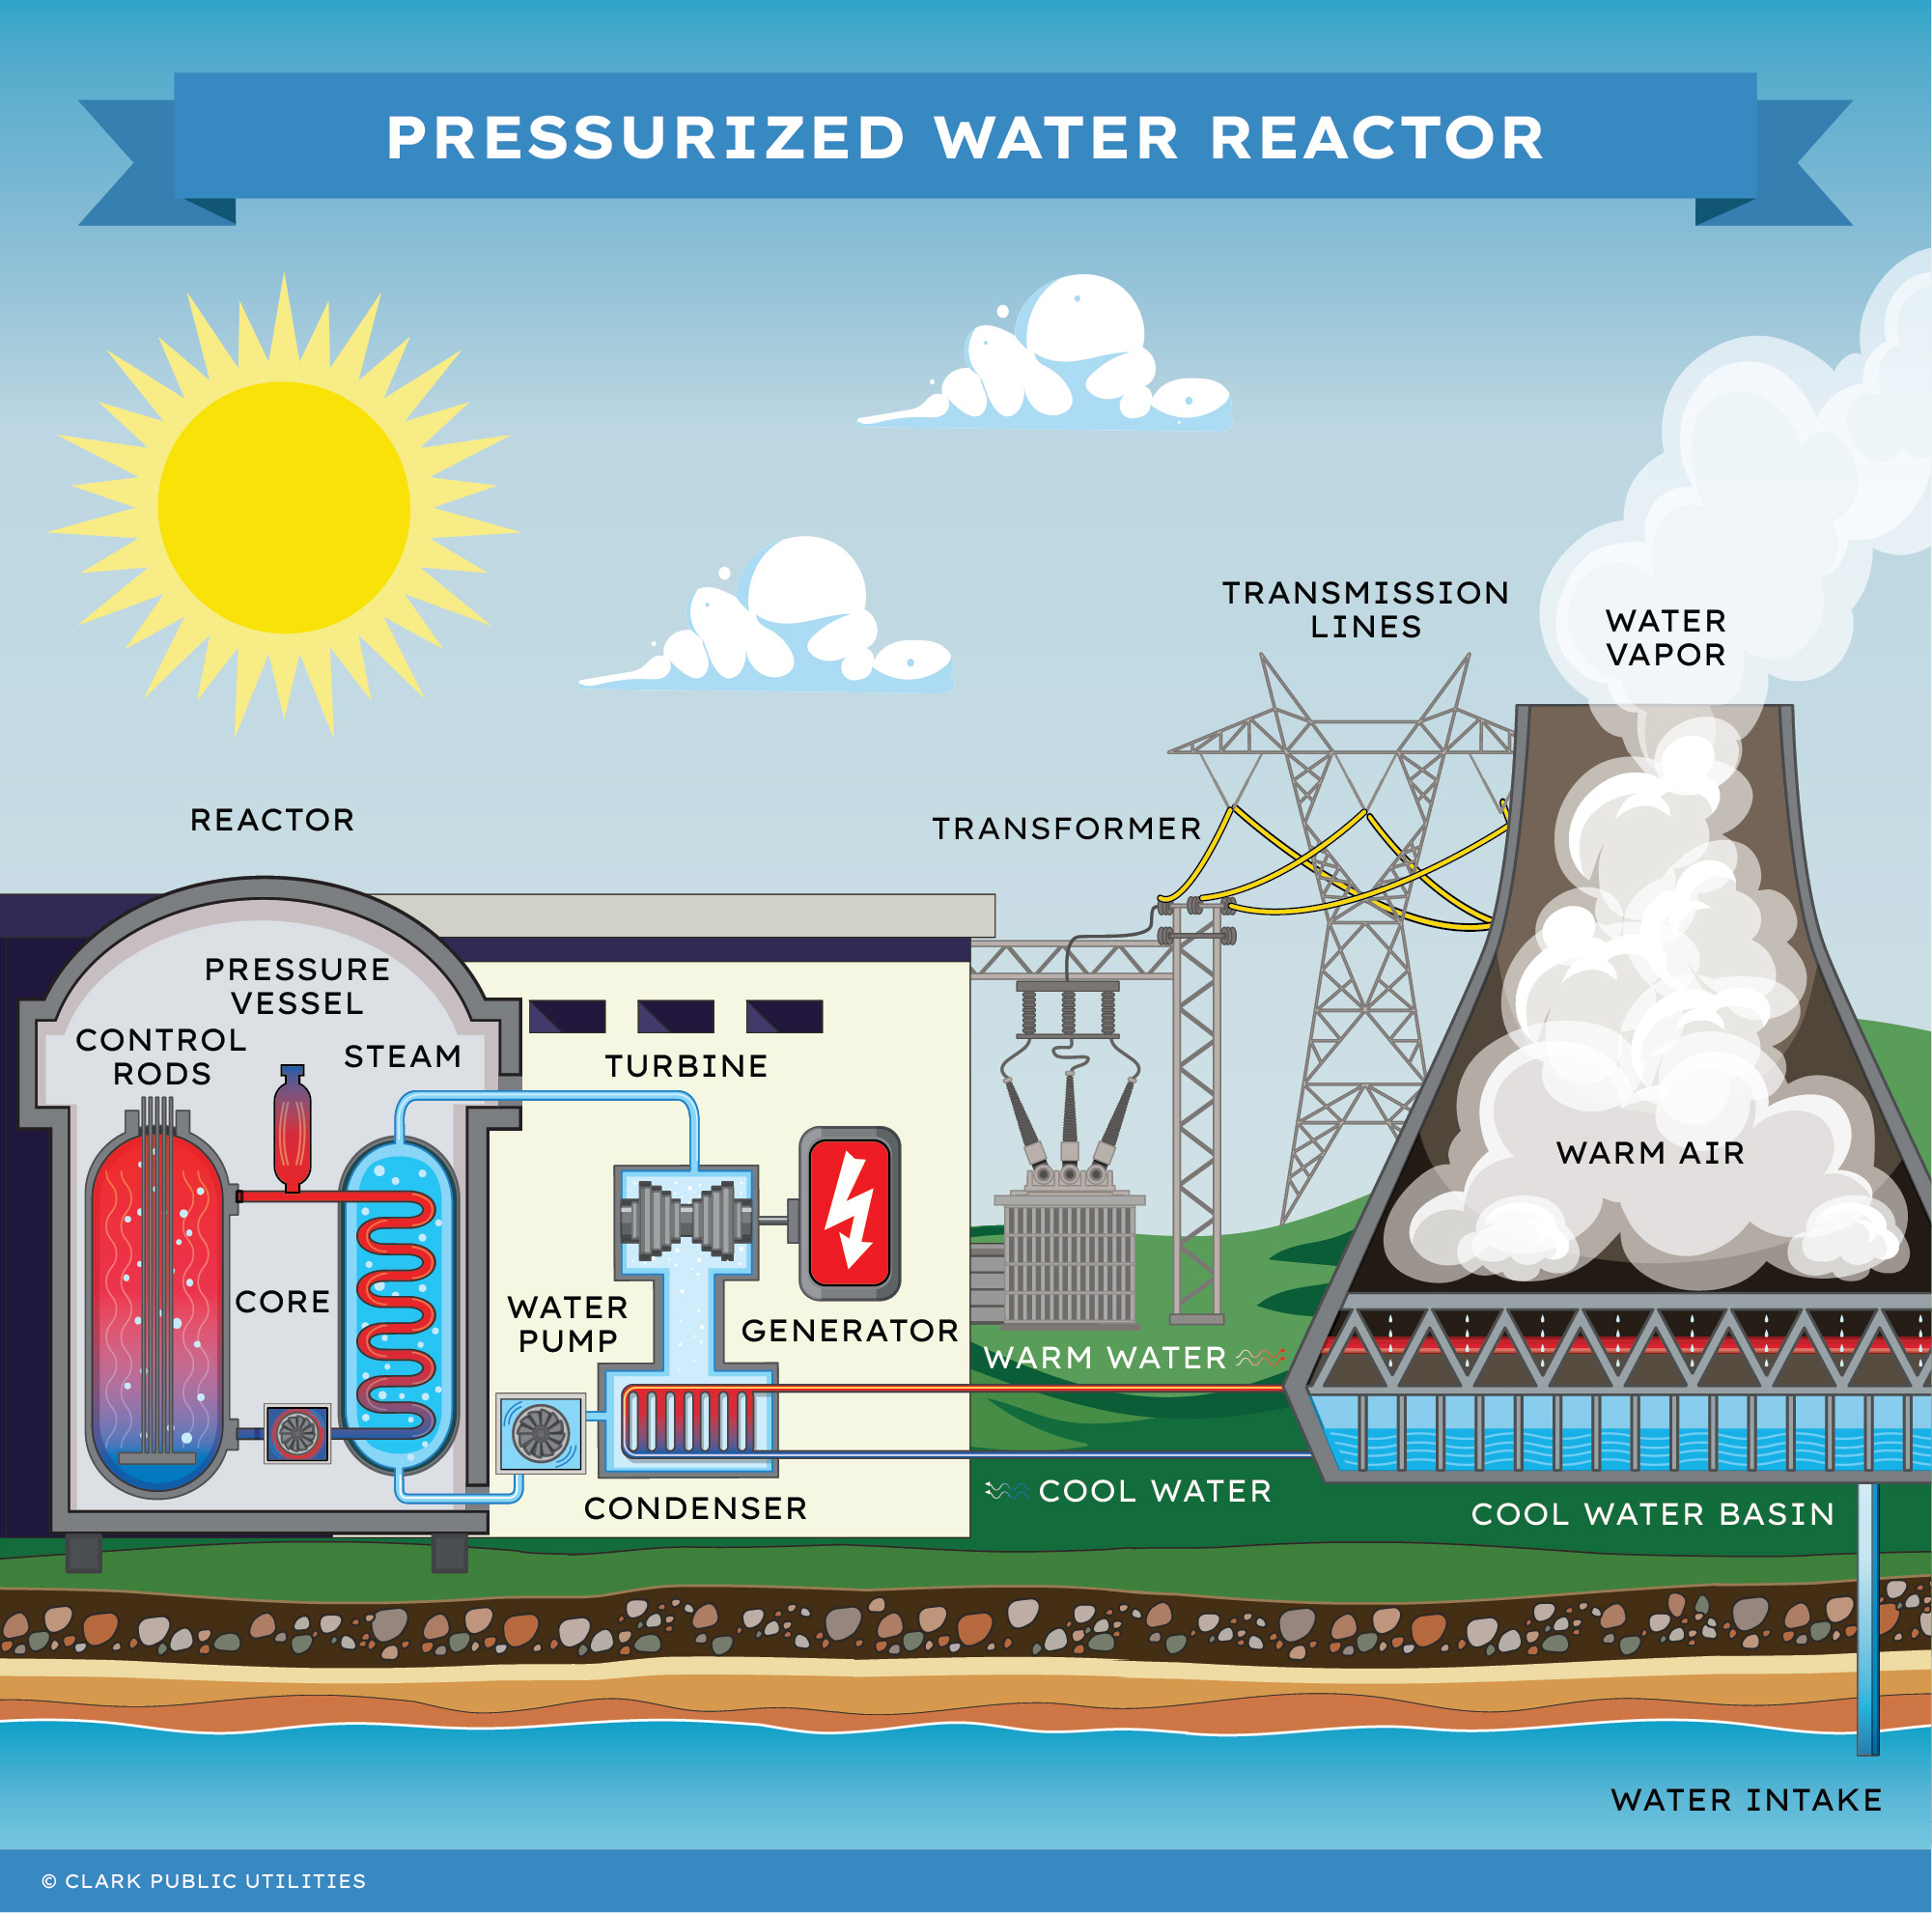 Pressurized water reactor illustration